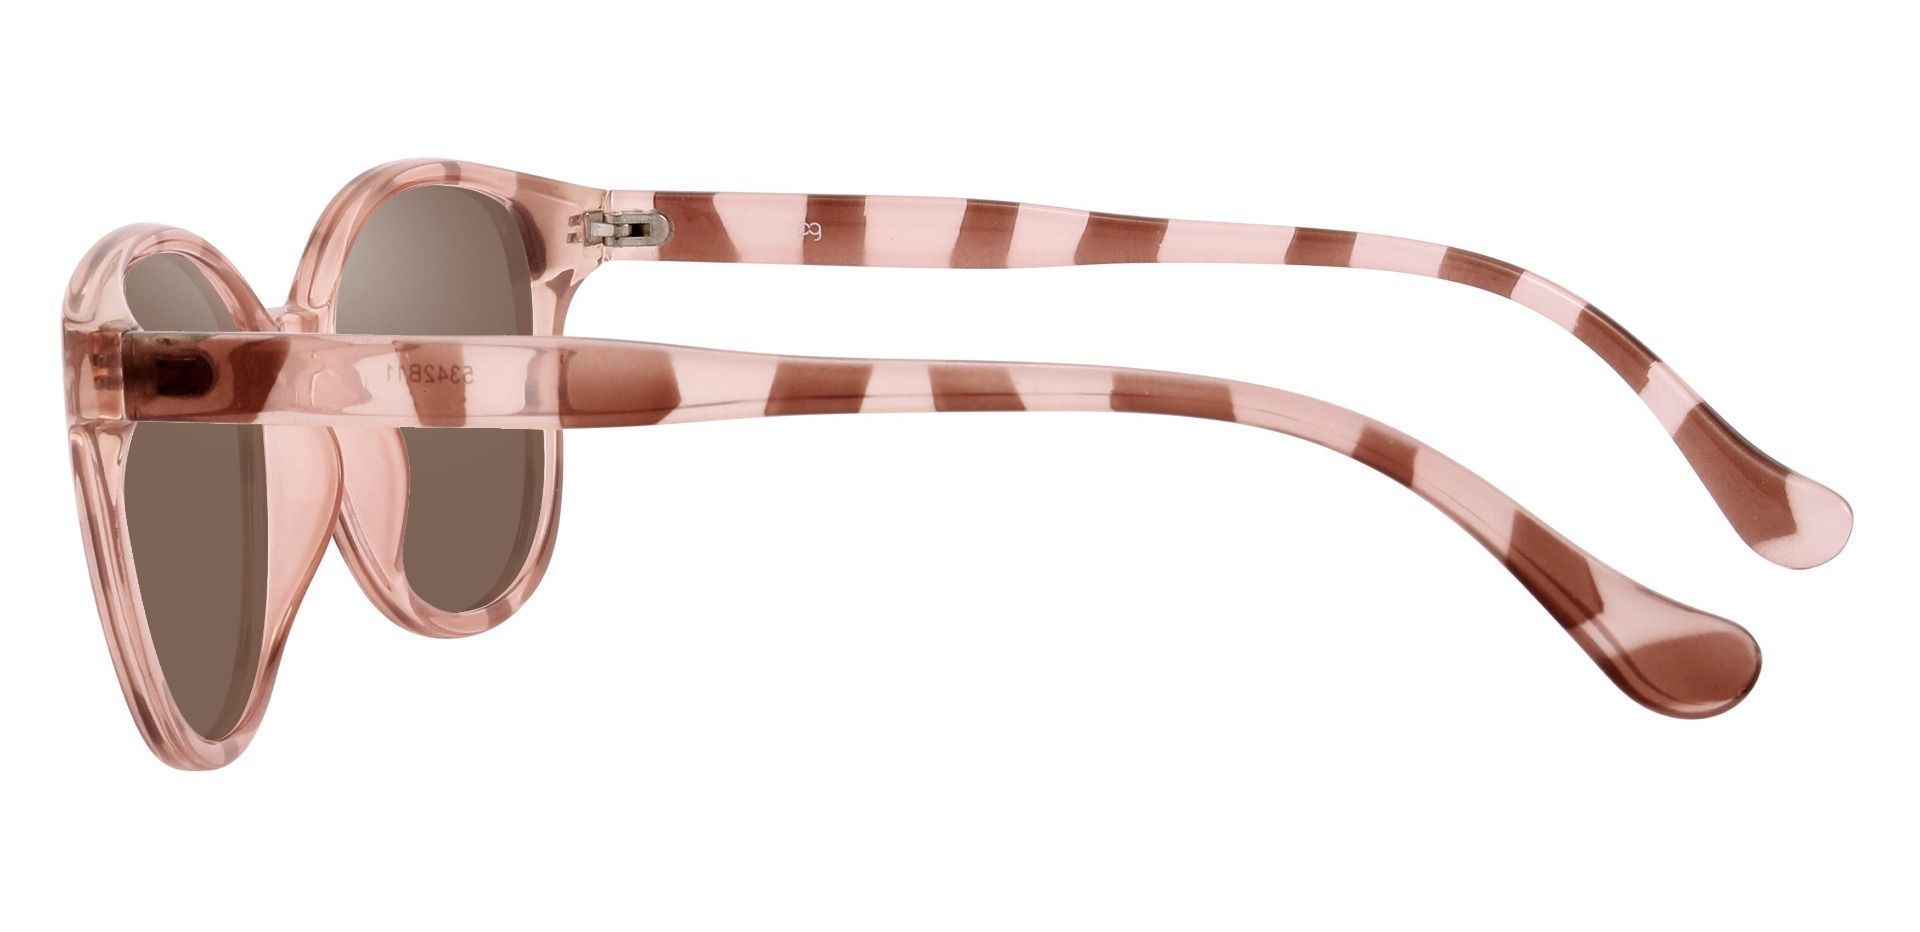 Carrick Square Prescription Sunglasses - Multi Color Frame With Brown Lenses